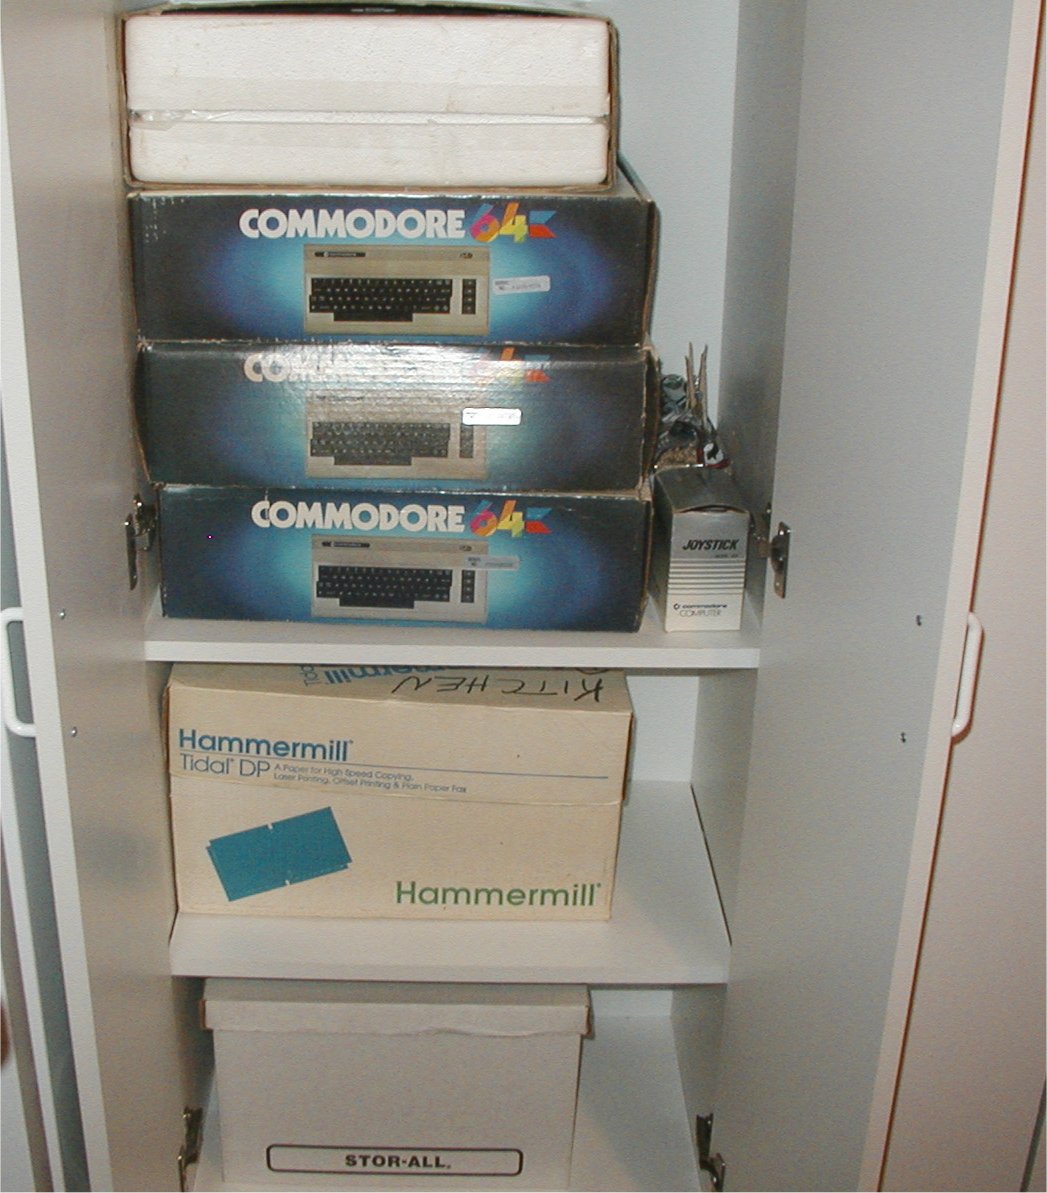 The Commodore 64 hoard